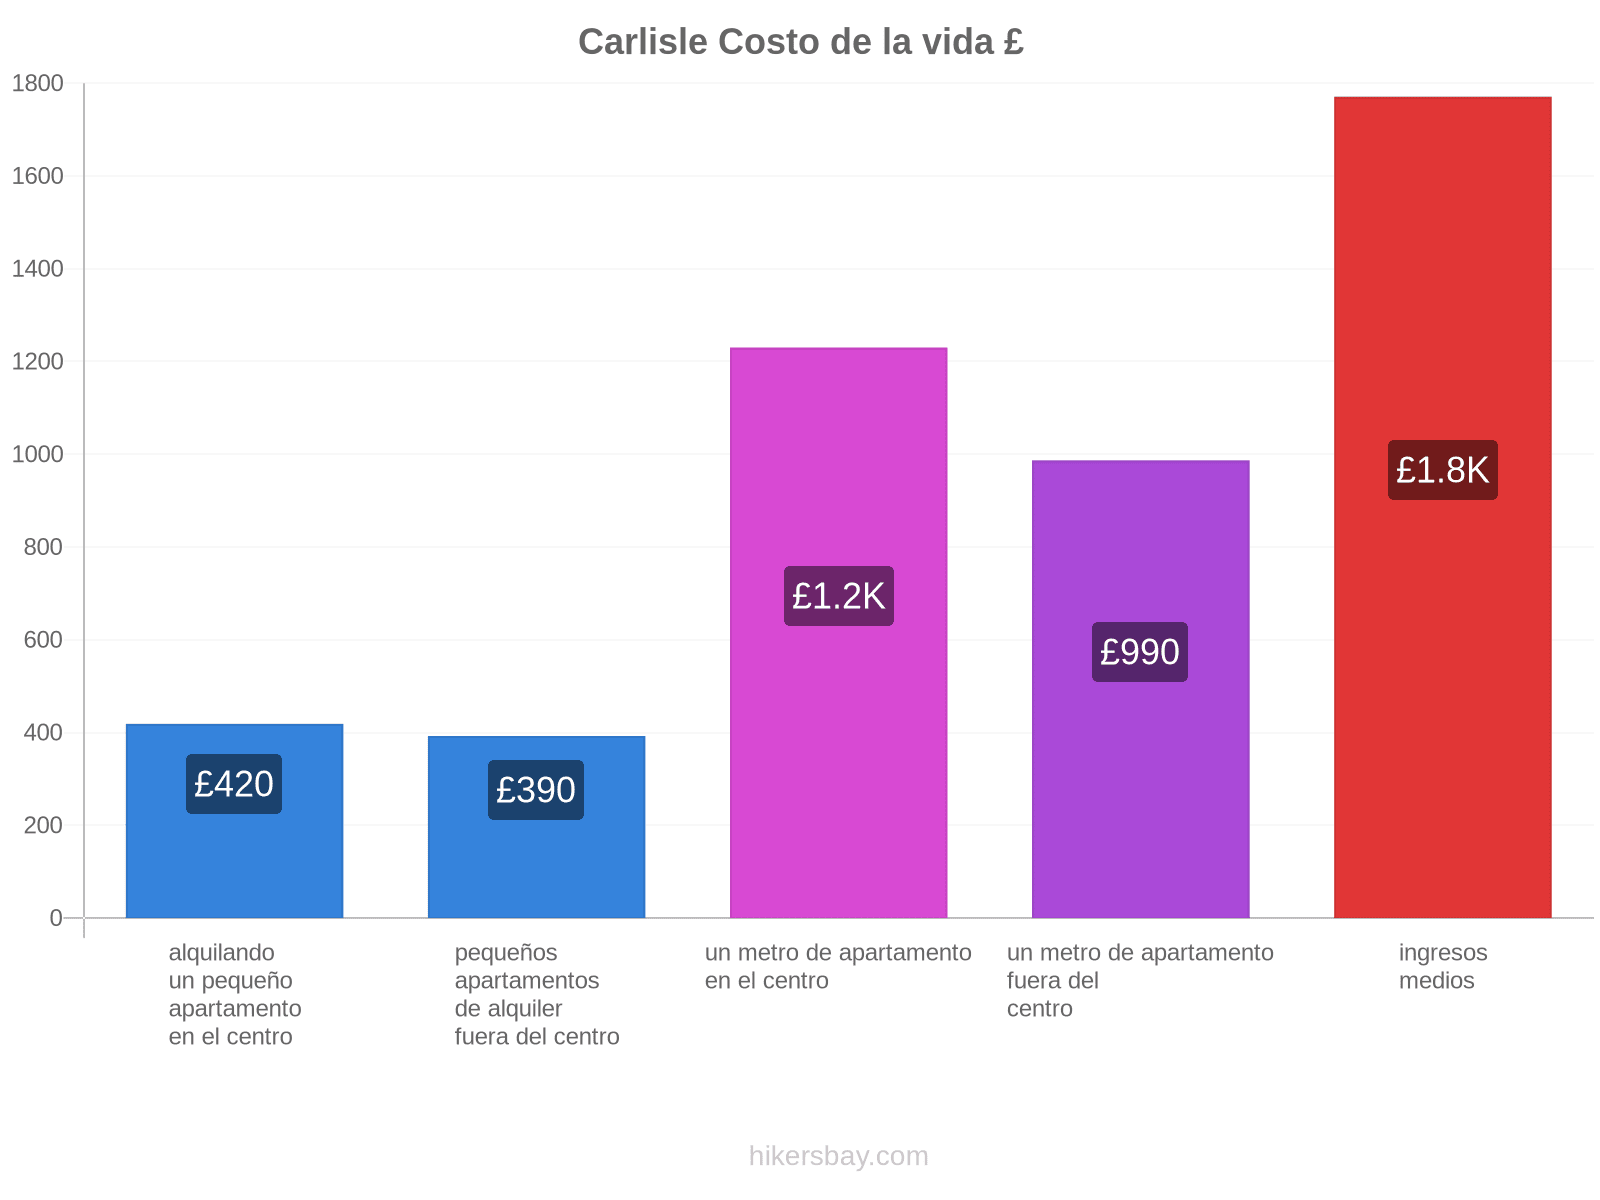 Carlisle costo de la vida hikersbay.com